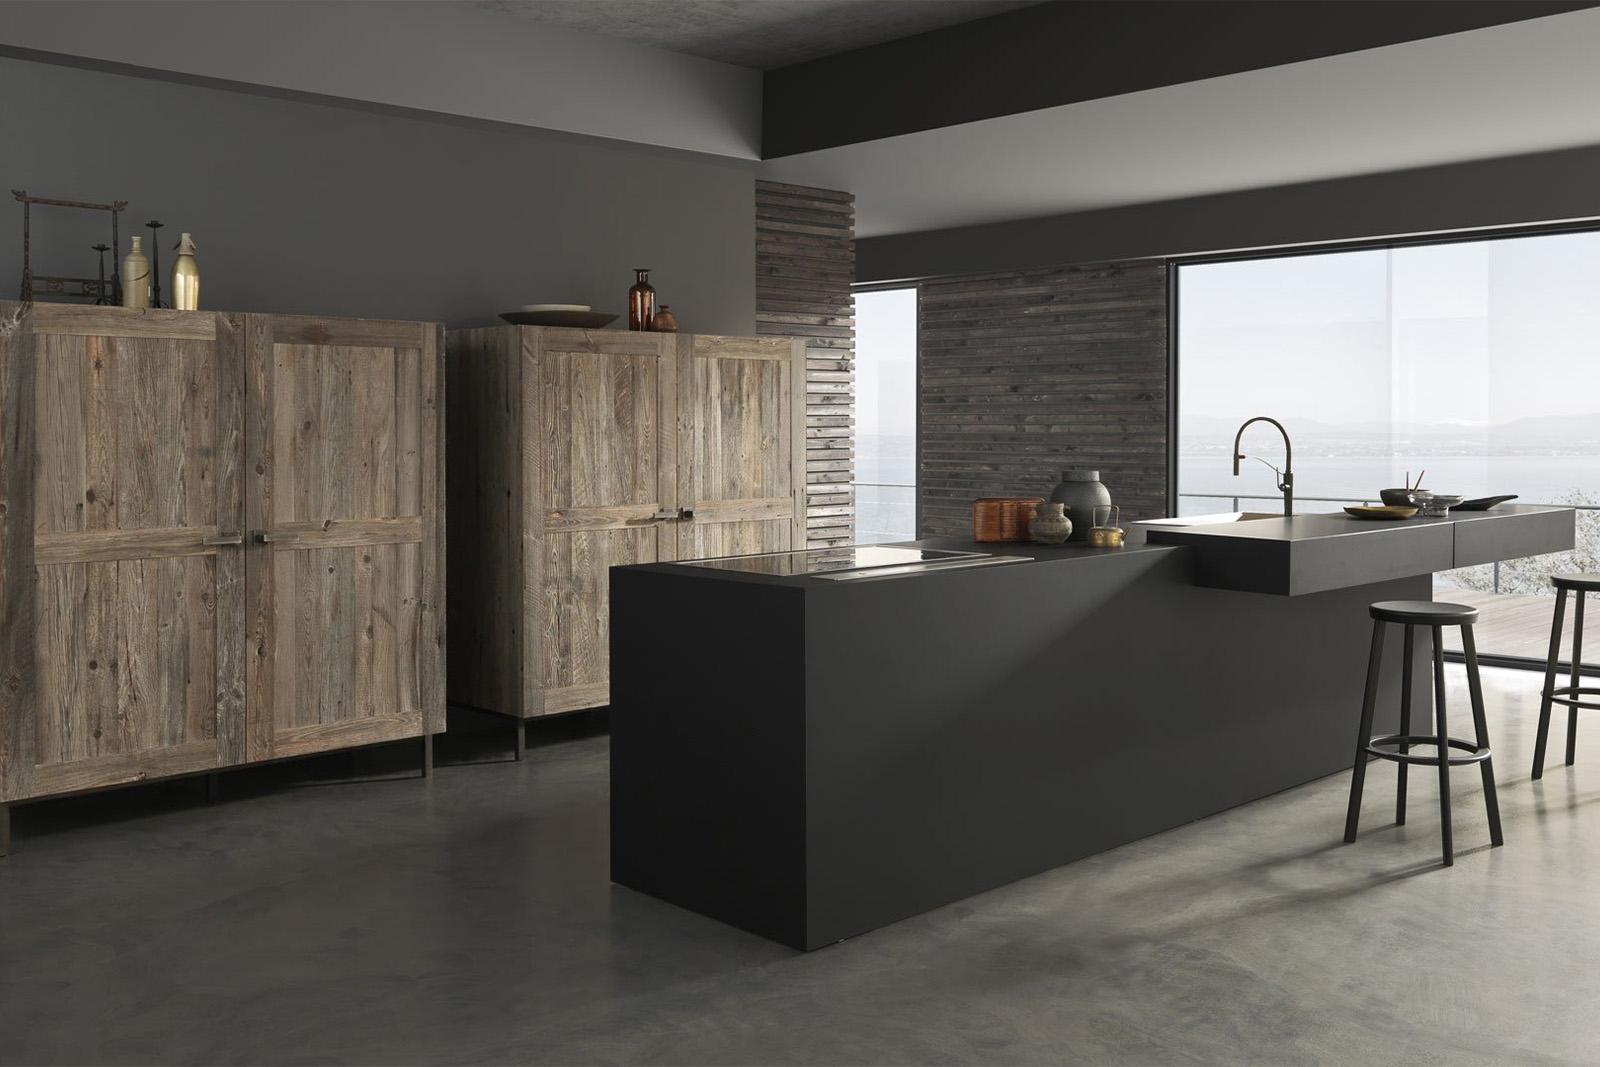 Elegant and opulent kitchen cabinets